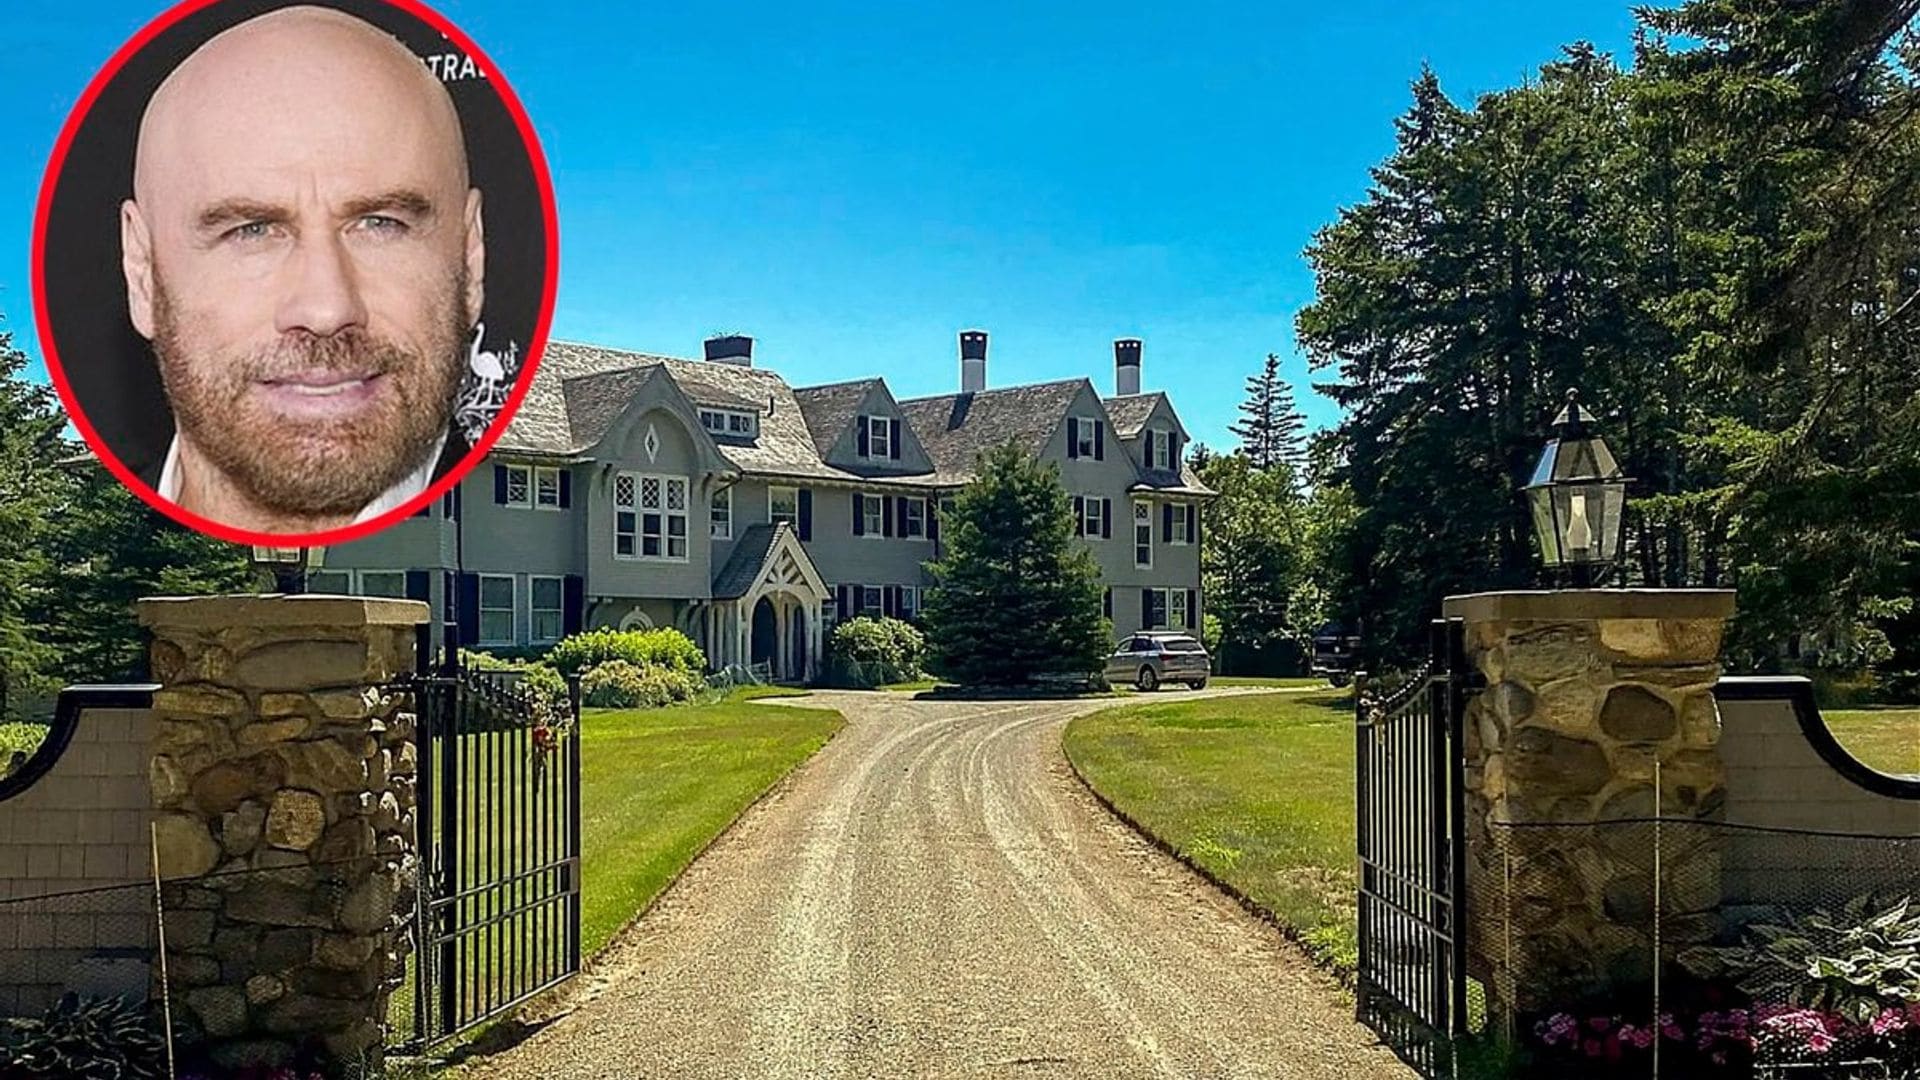 John Travolta puts 20-bedroom Maine property on the market for $5 million